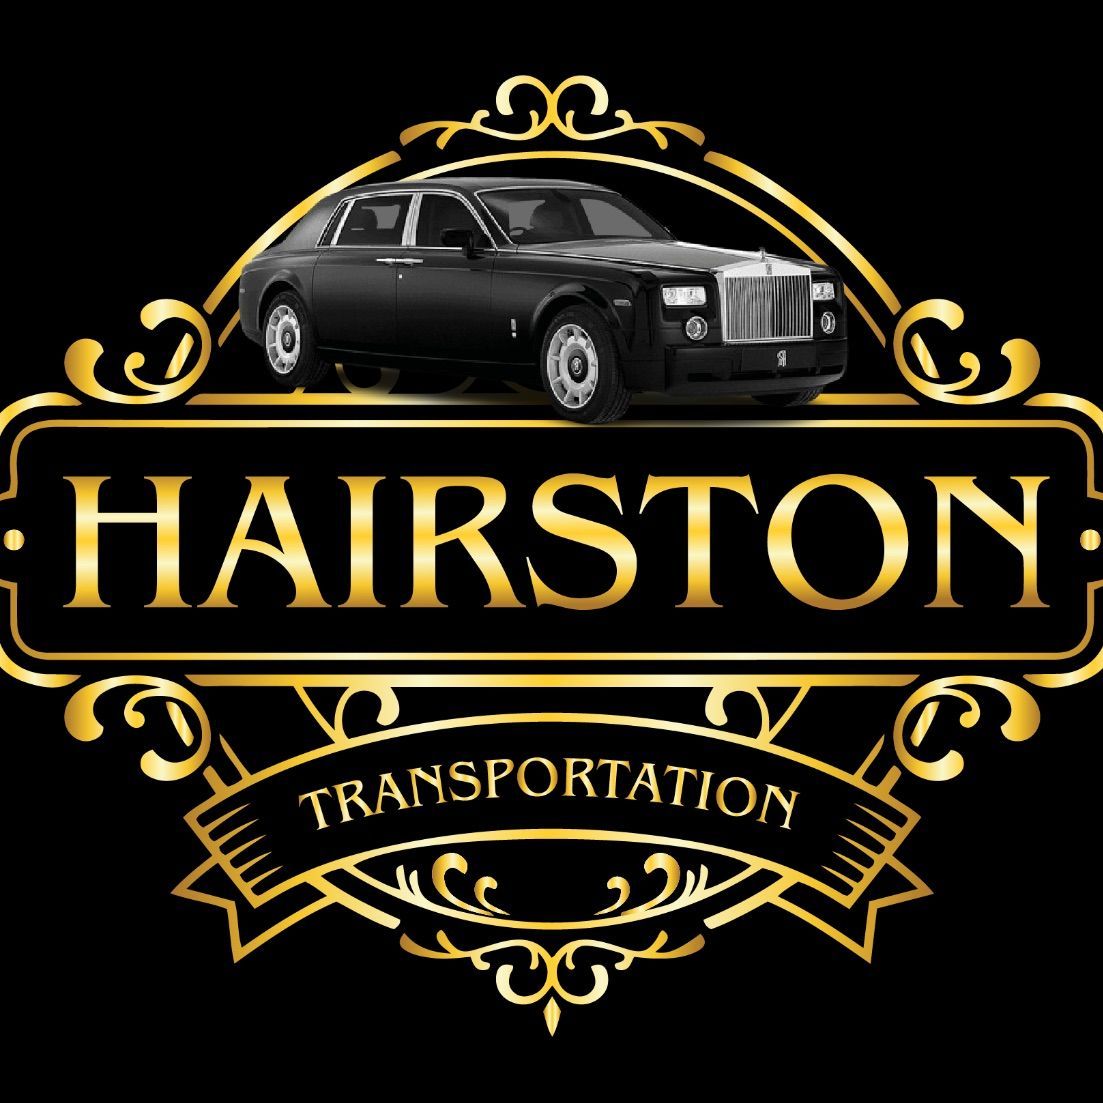 Hairston Transportation LLC, Birmingham, 35244